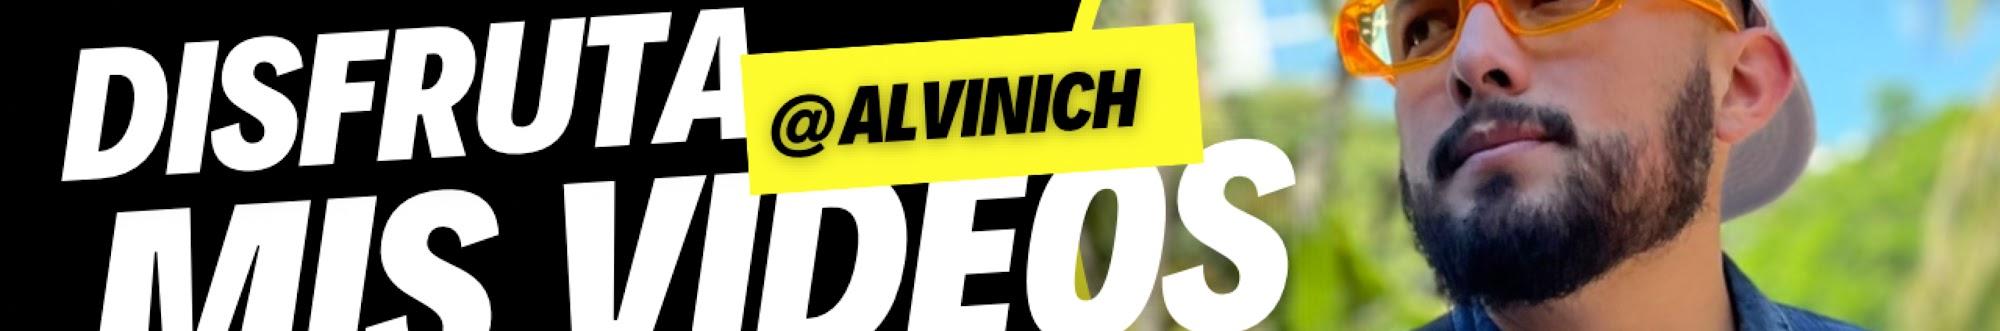 Alvinich